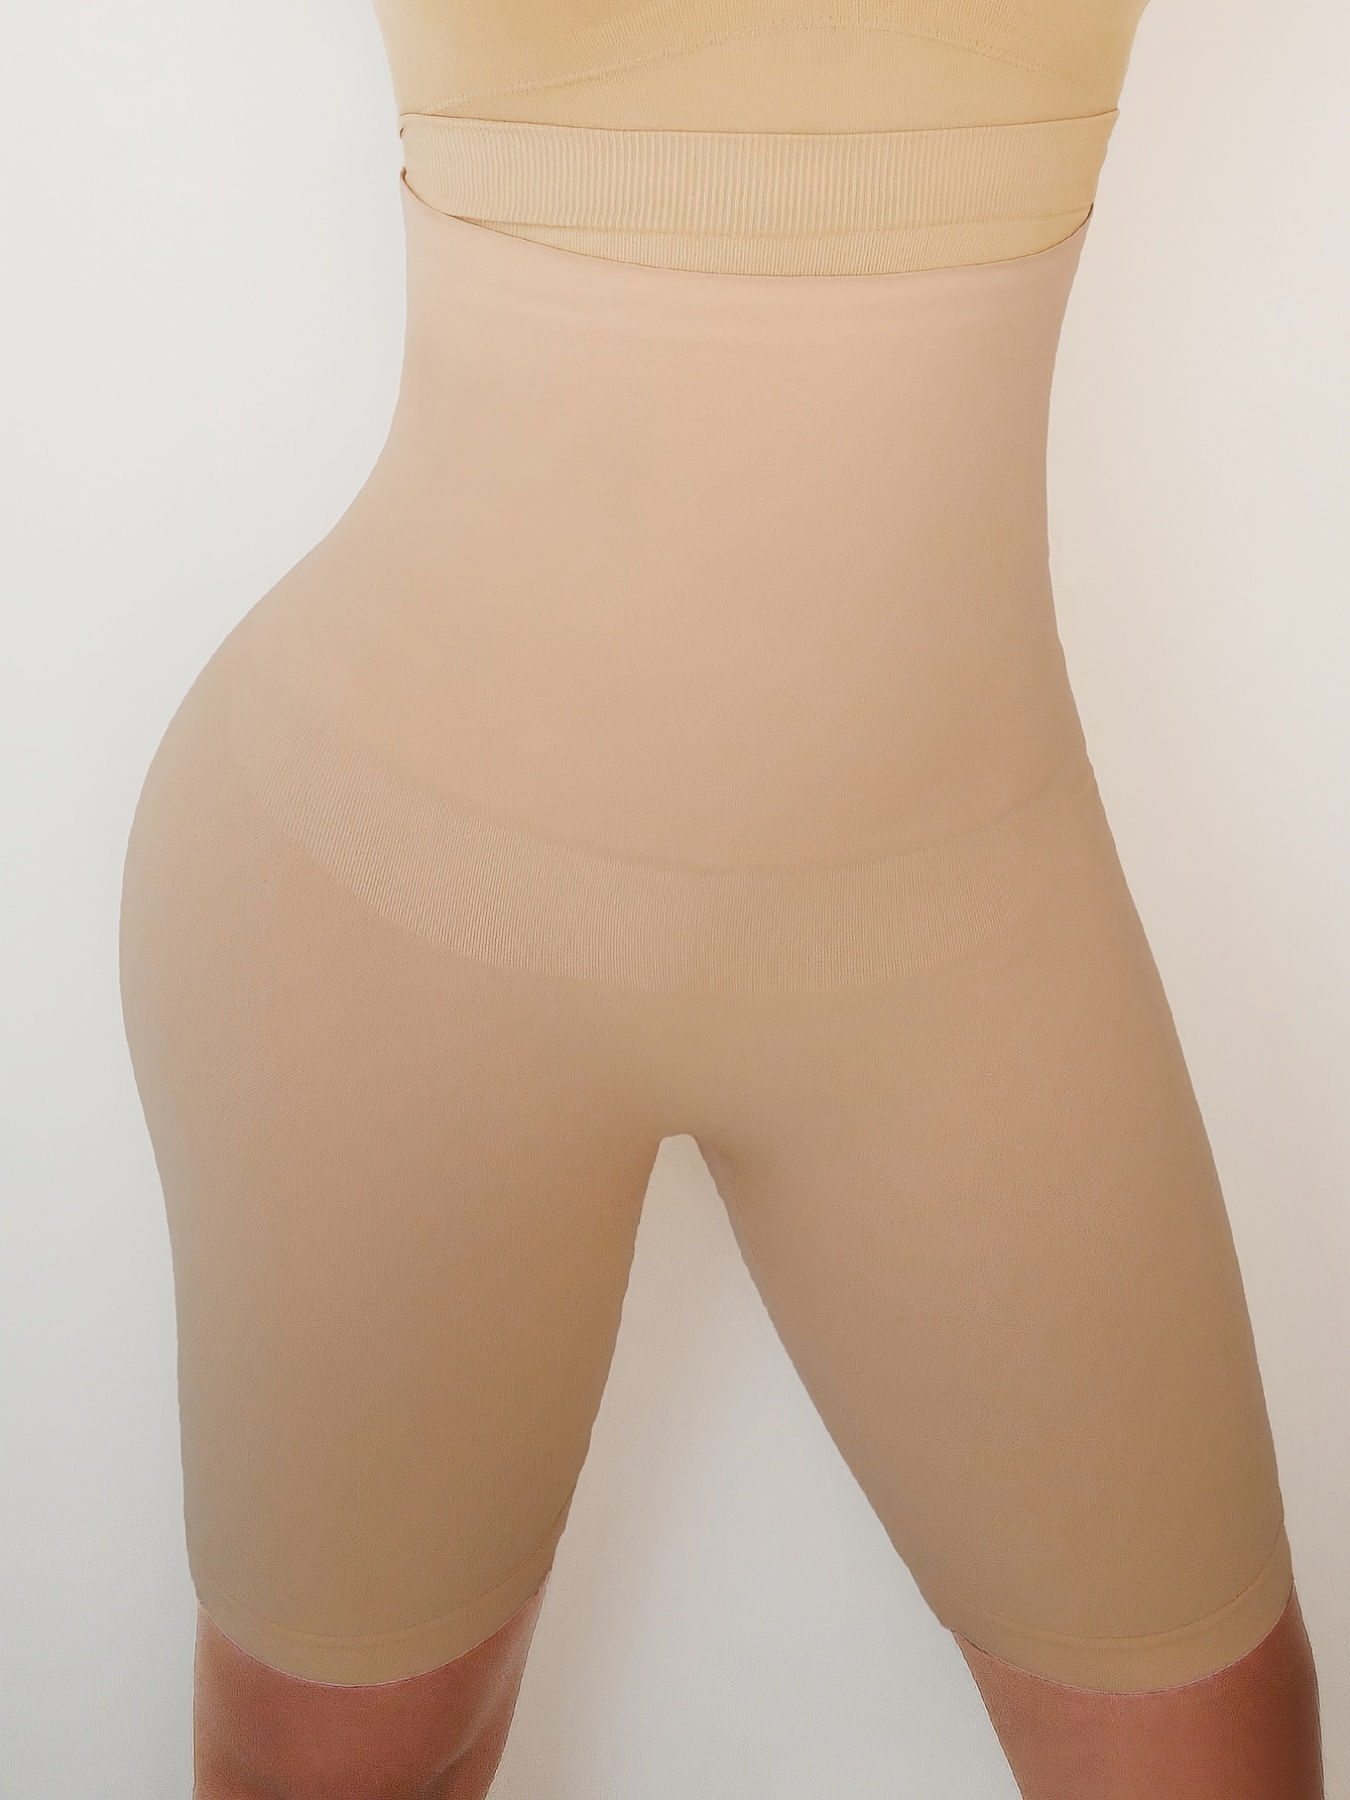 Babibeauty Women's Shapewear High Waist Tummy Control Fajas Colombianas  Girdle Slim Body Shaper Panties 